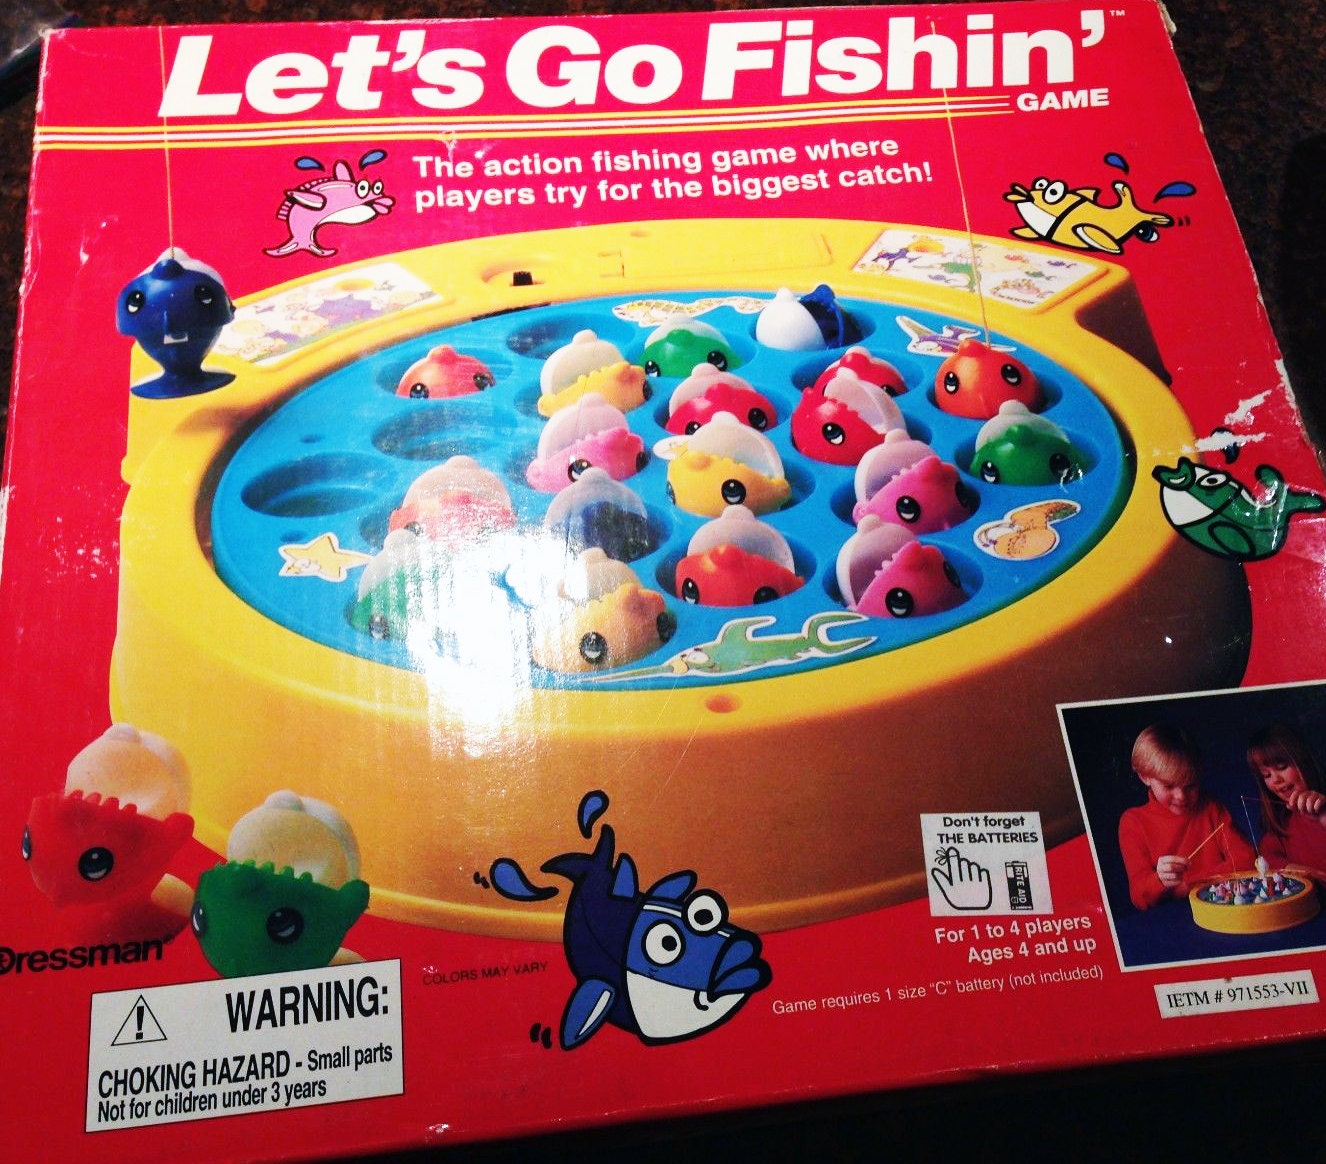 Magnetic Fishing Game Toys for Kids Fishing Rod Turkey